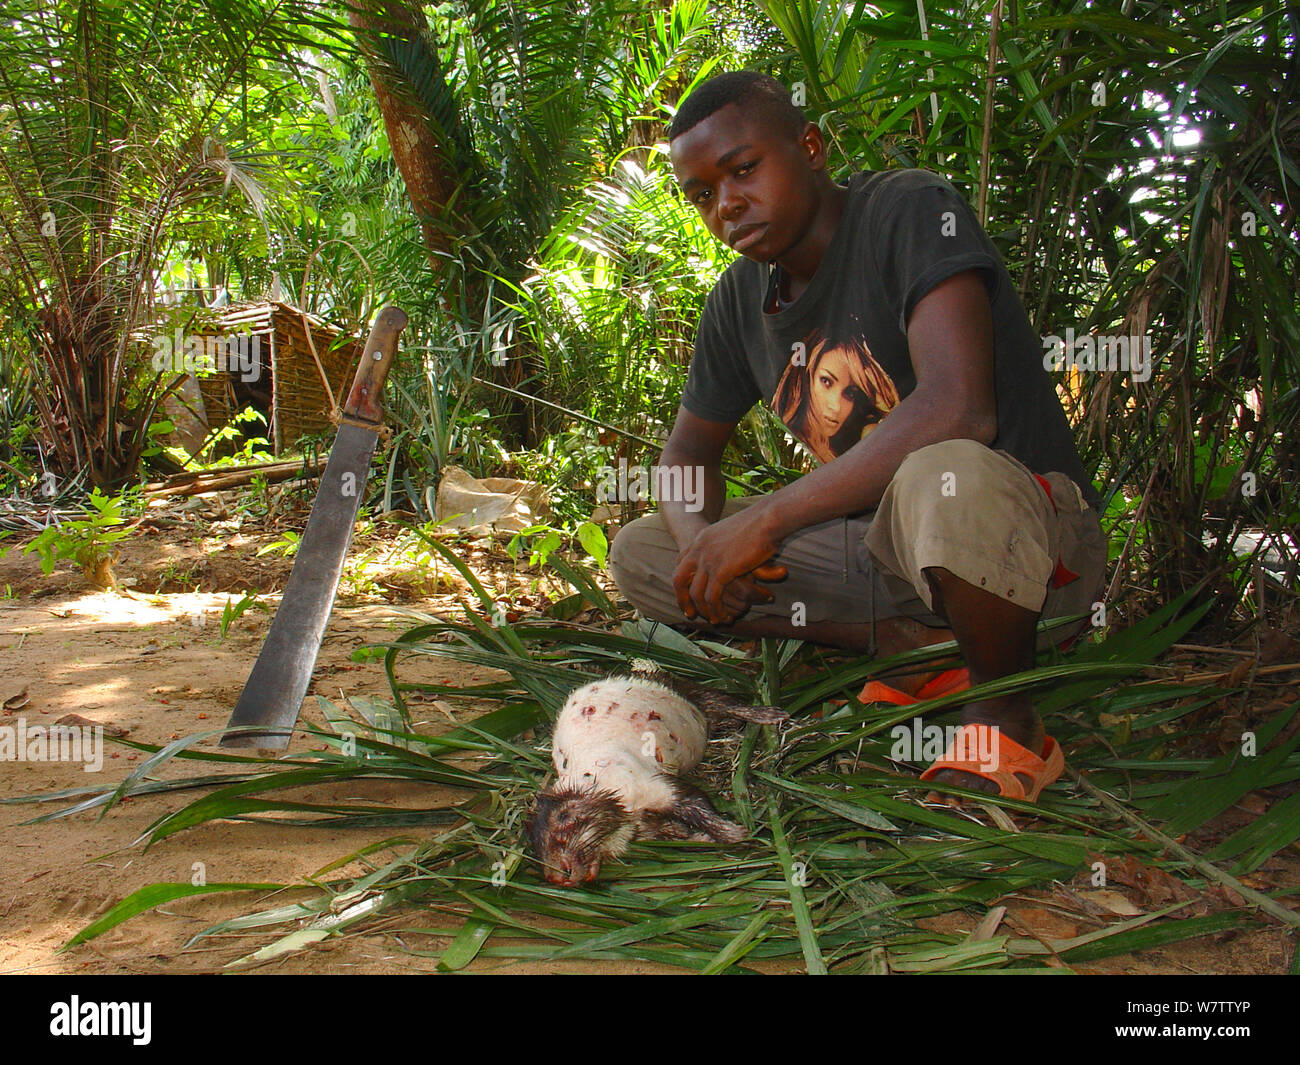 Preparación de carne de animales silvestres:quitar las tapas de Brush-tailed puercoespín (Atherurus africanus), Mbomo, Odzala-Kokoua National Park, República del Congo Foto de stock